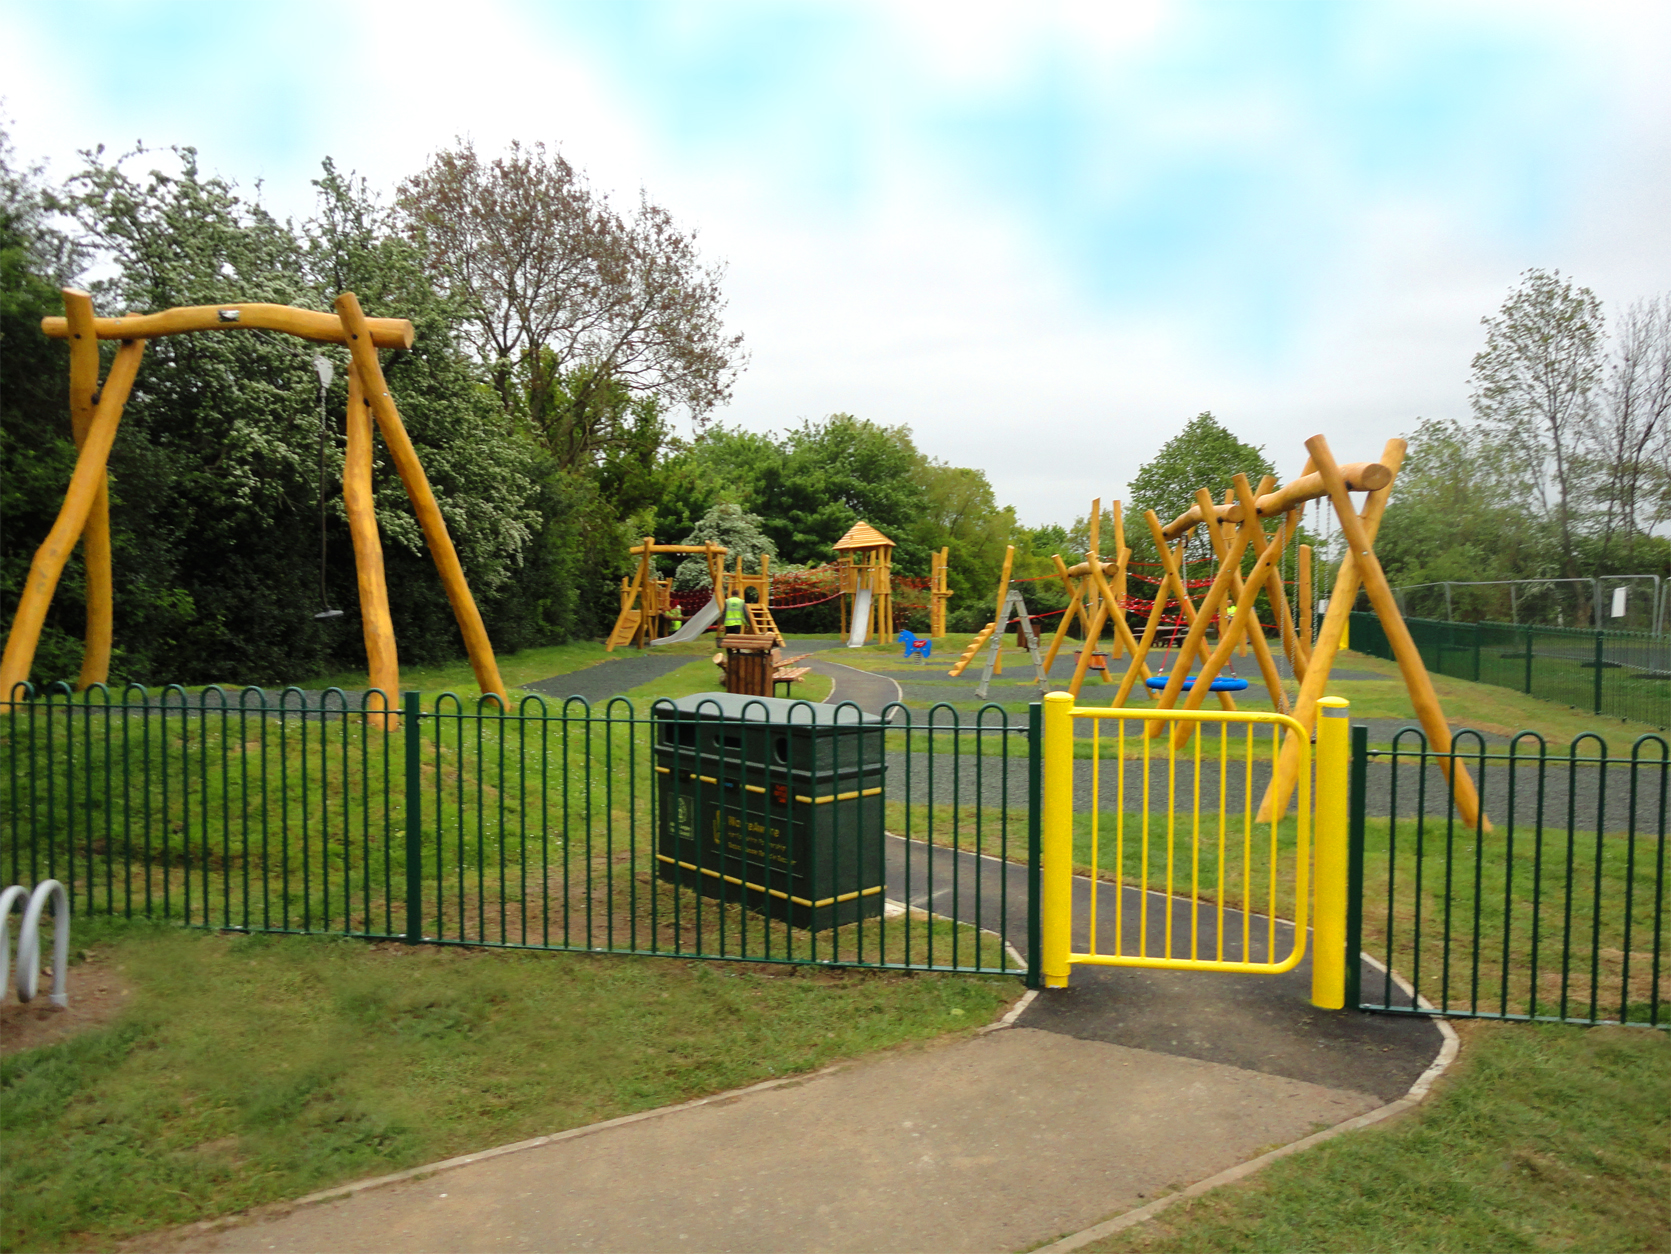 Bedmond Sports Ground | The Children's Playground Company